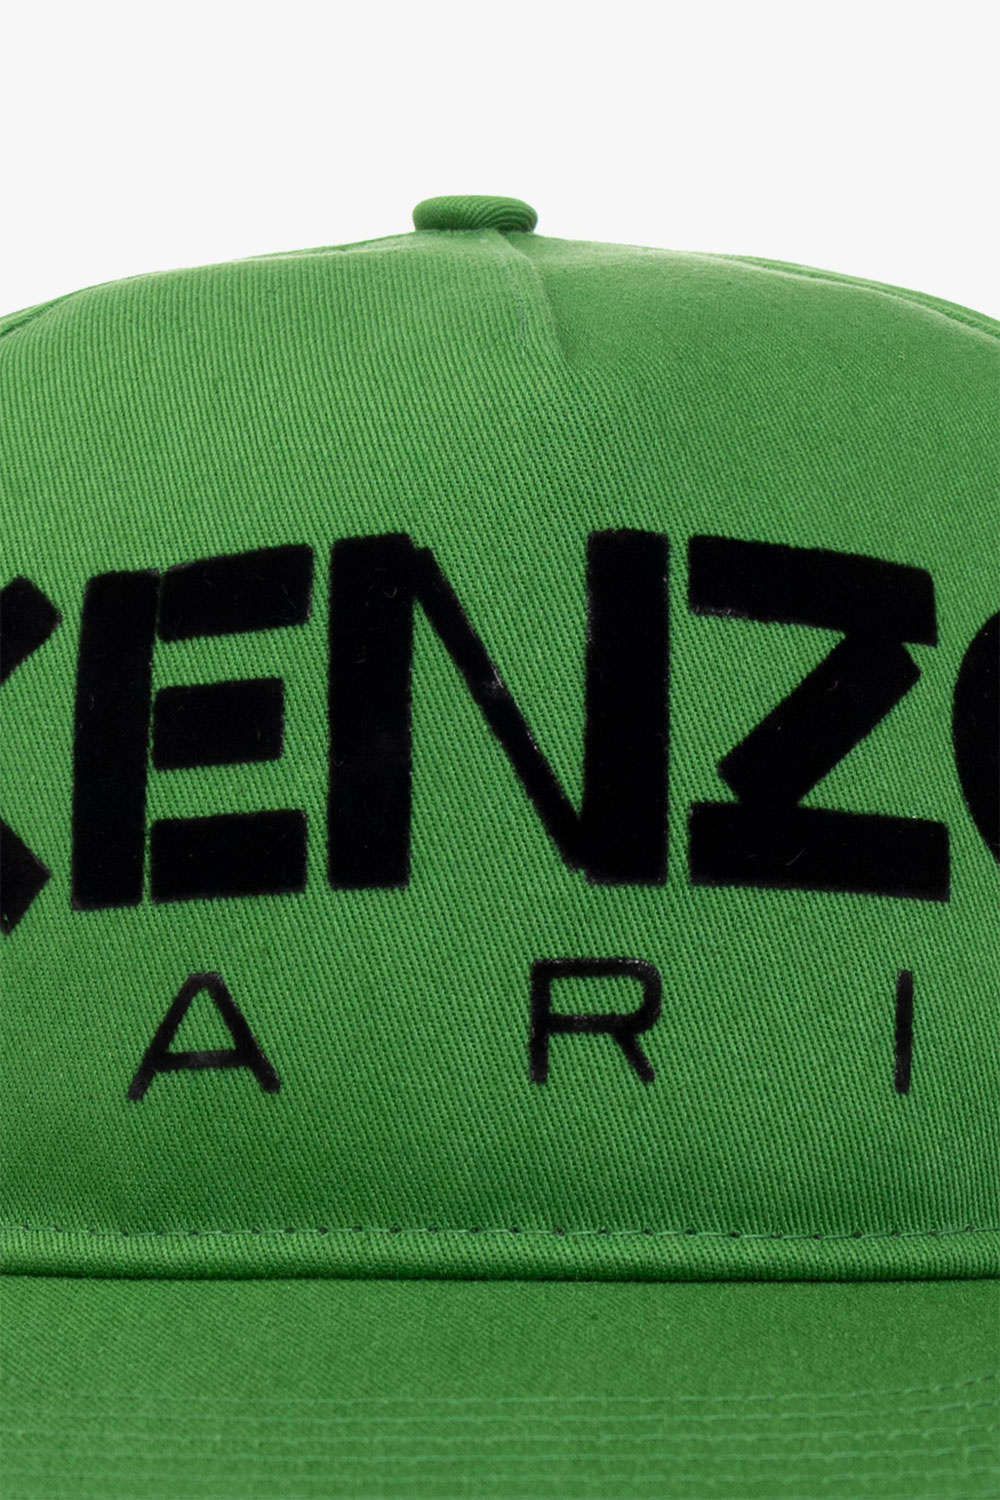 Kenzo robes storage box caps Headwear Accessories